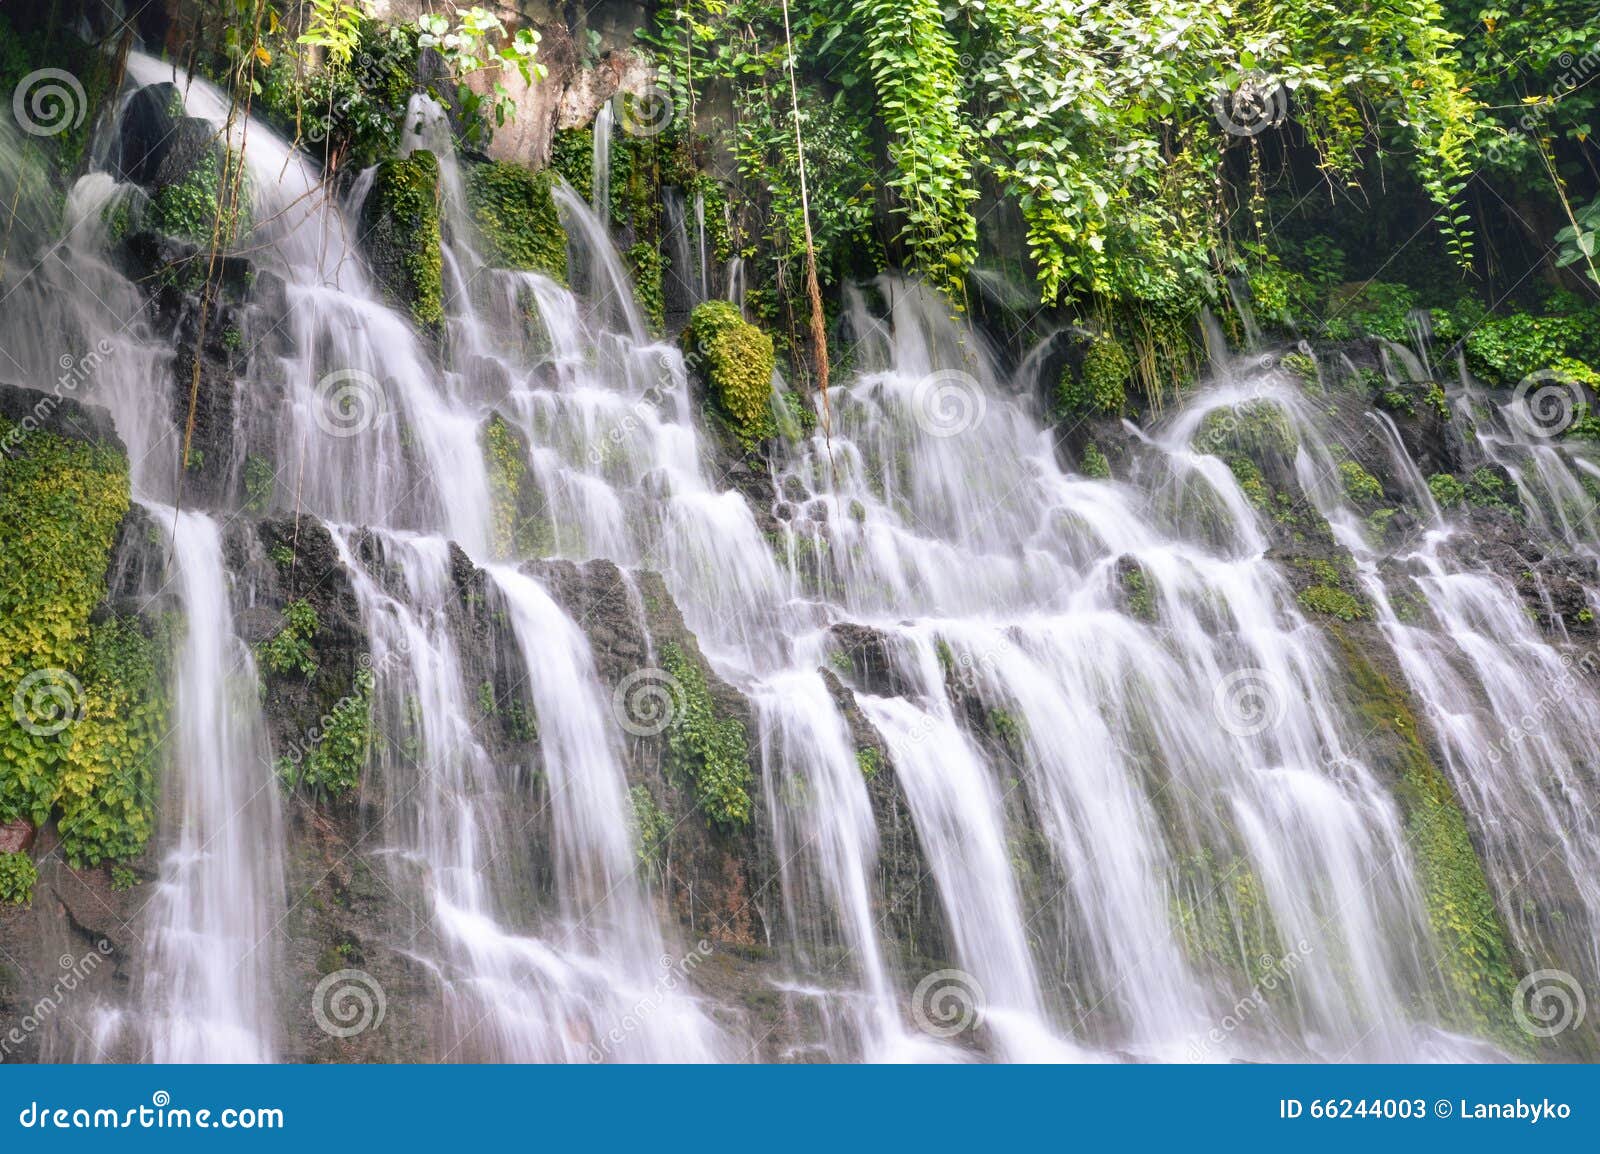 chorros de la calera waterfalls in juayua, el salvador